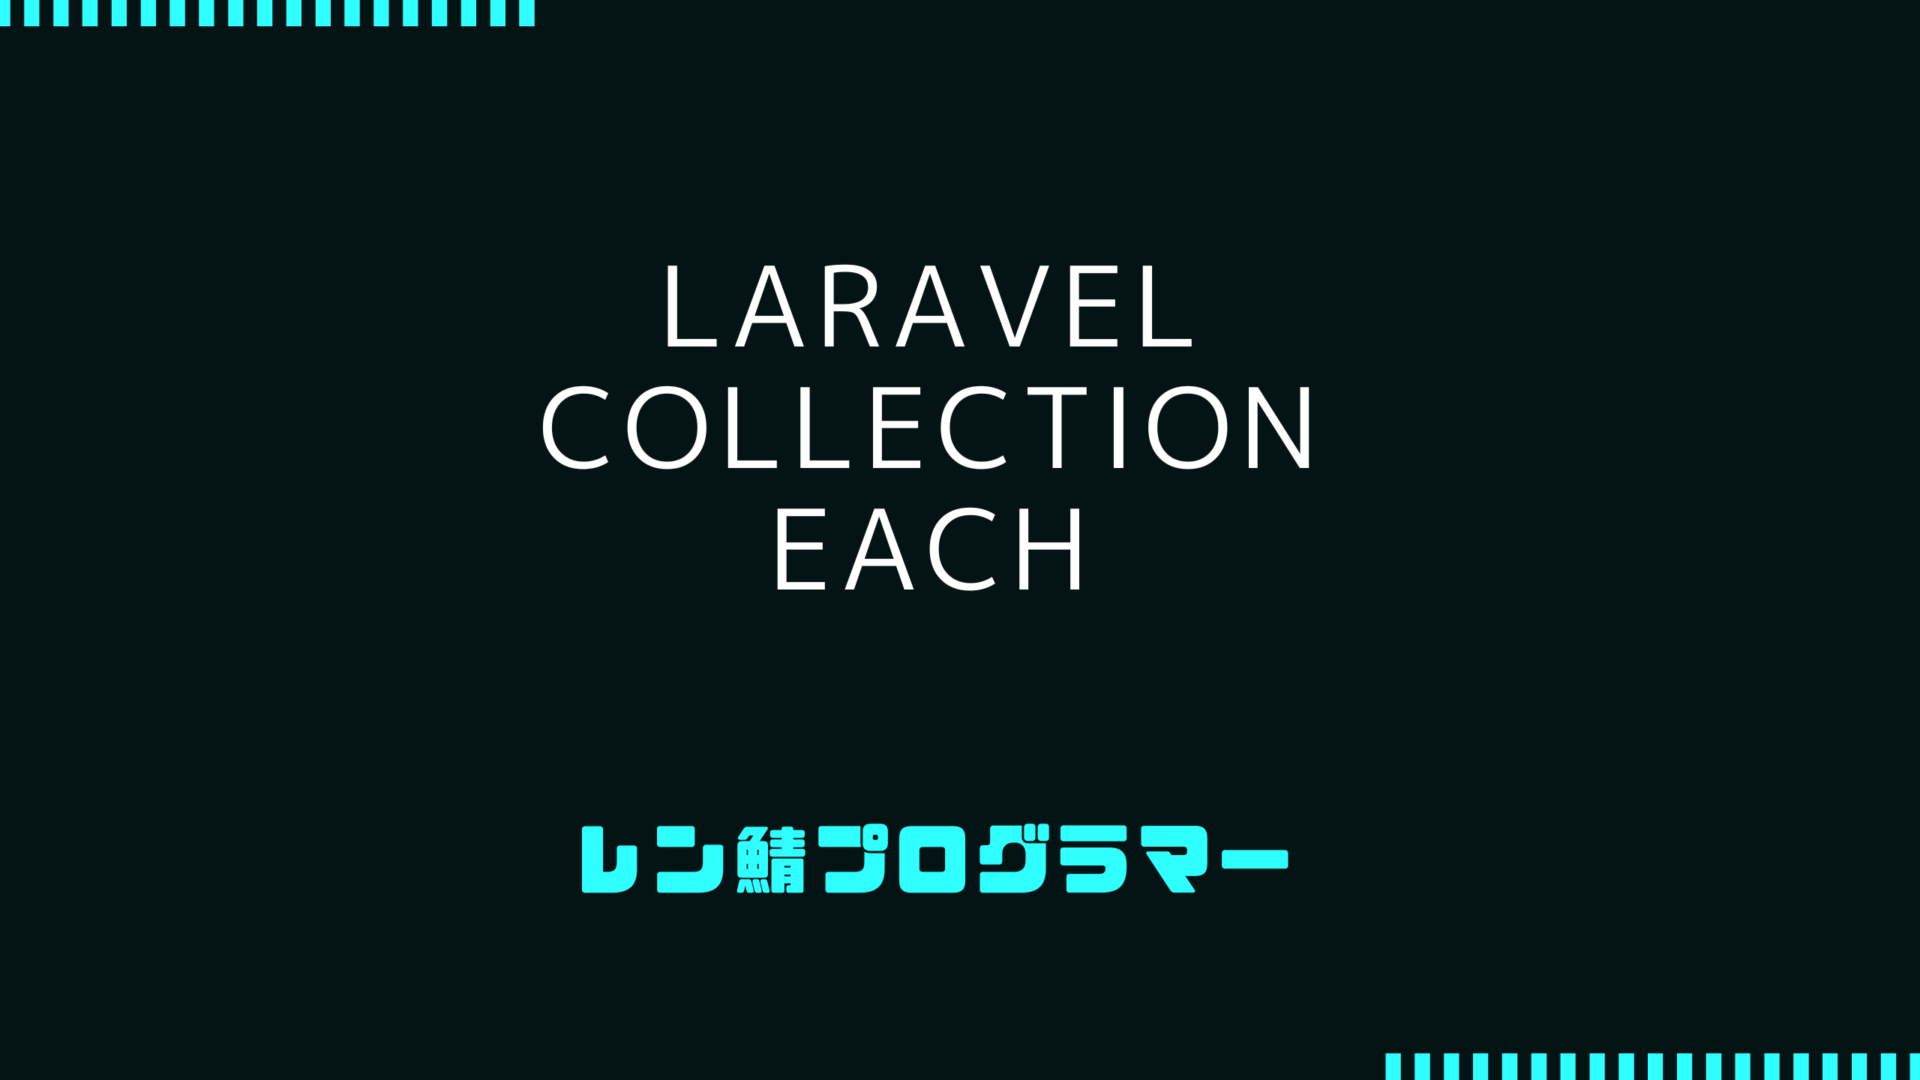 Laravel Collectionの each メソッドで反復処理を効率化する